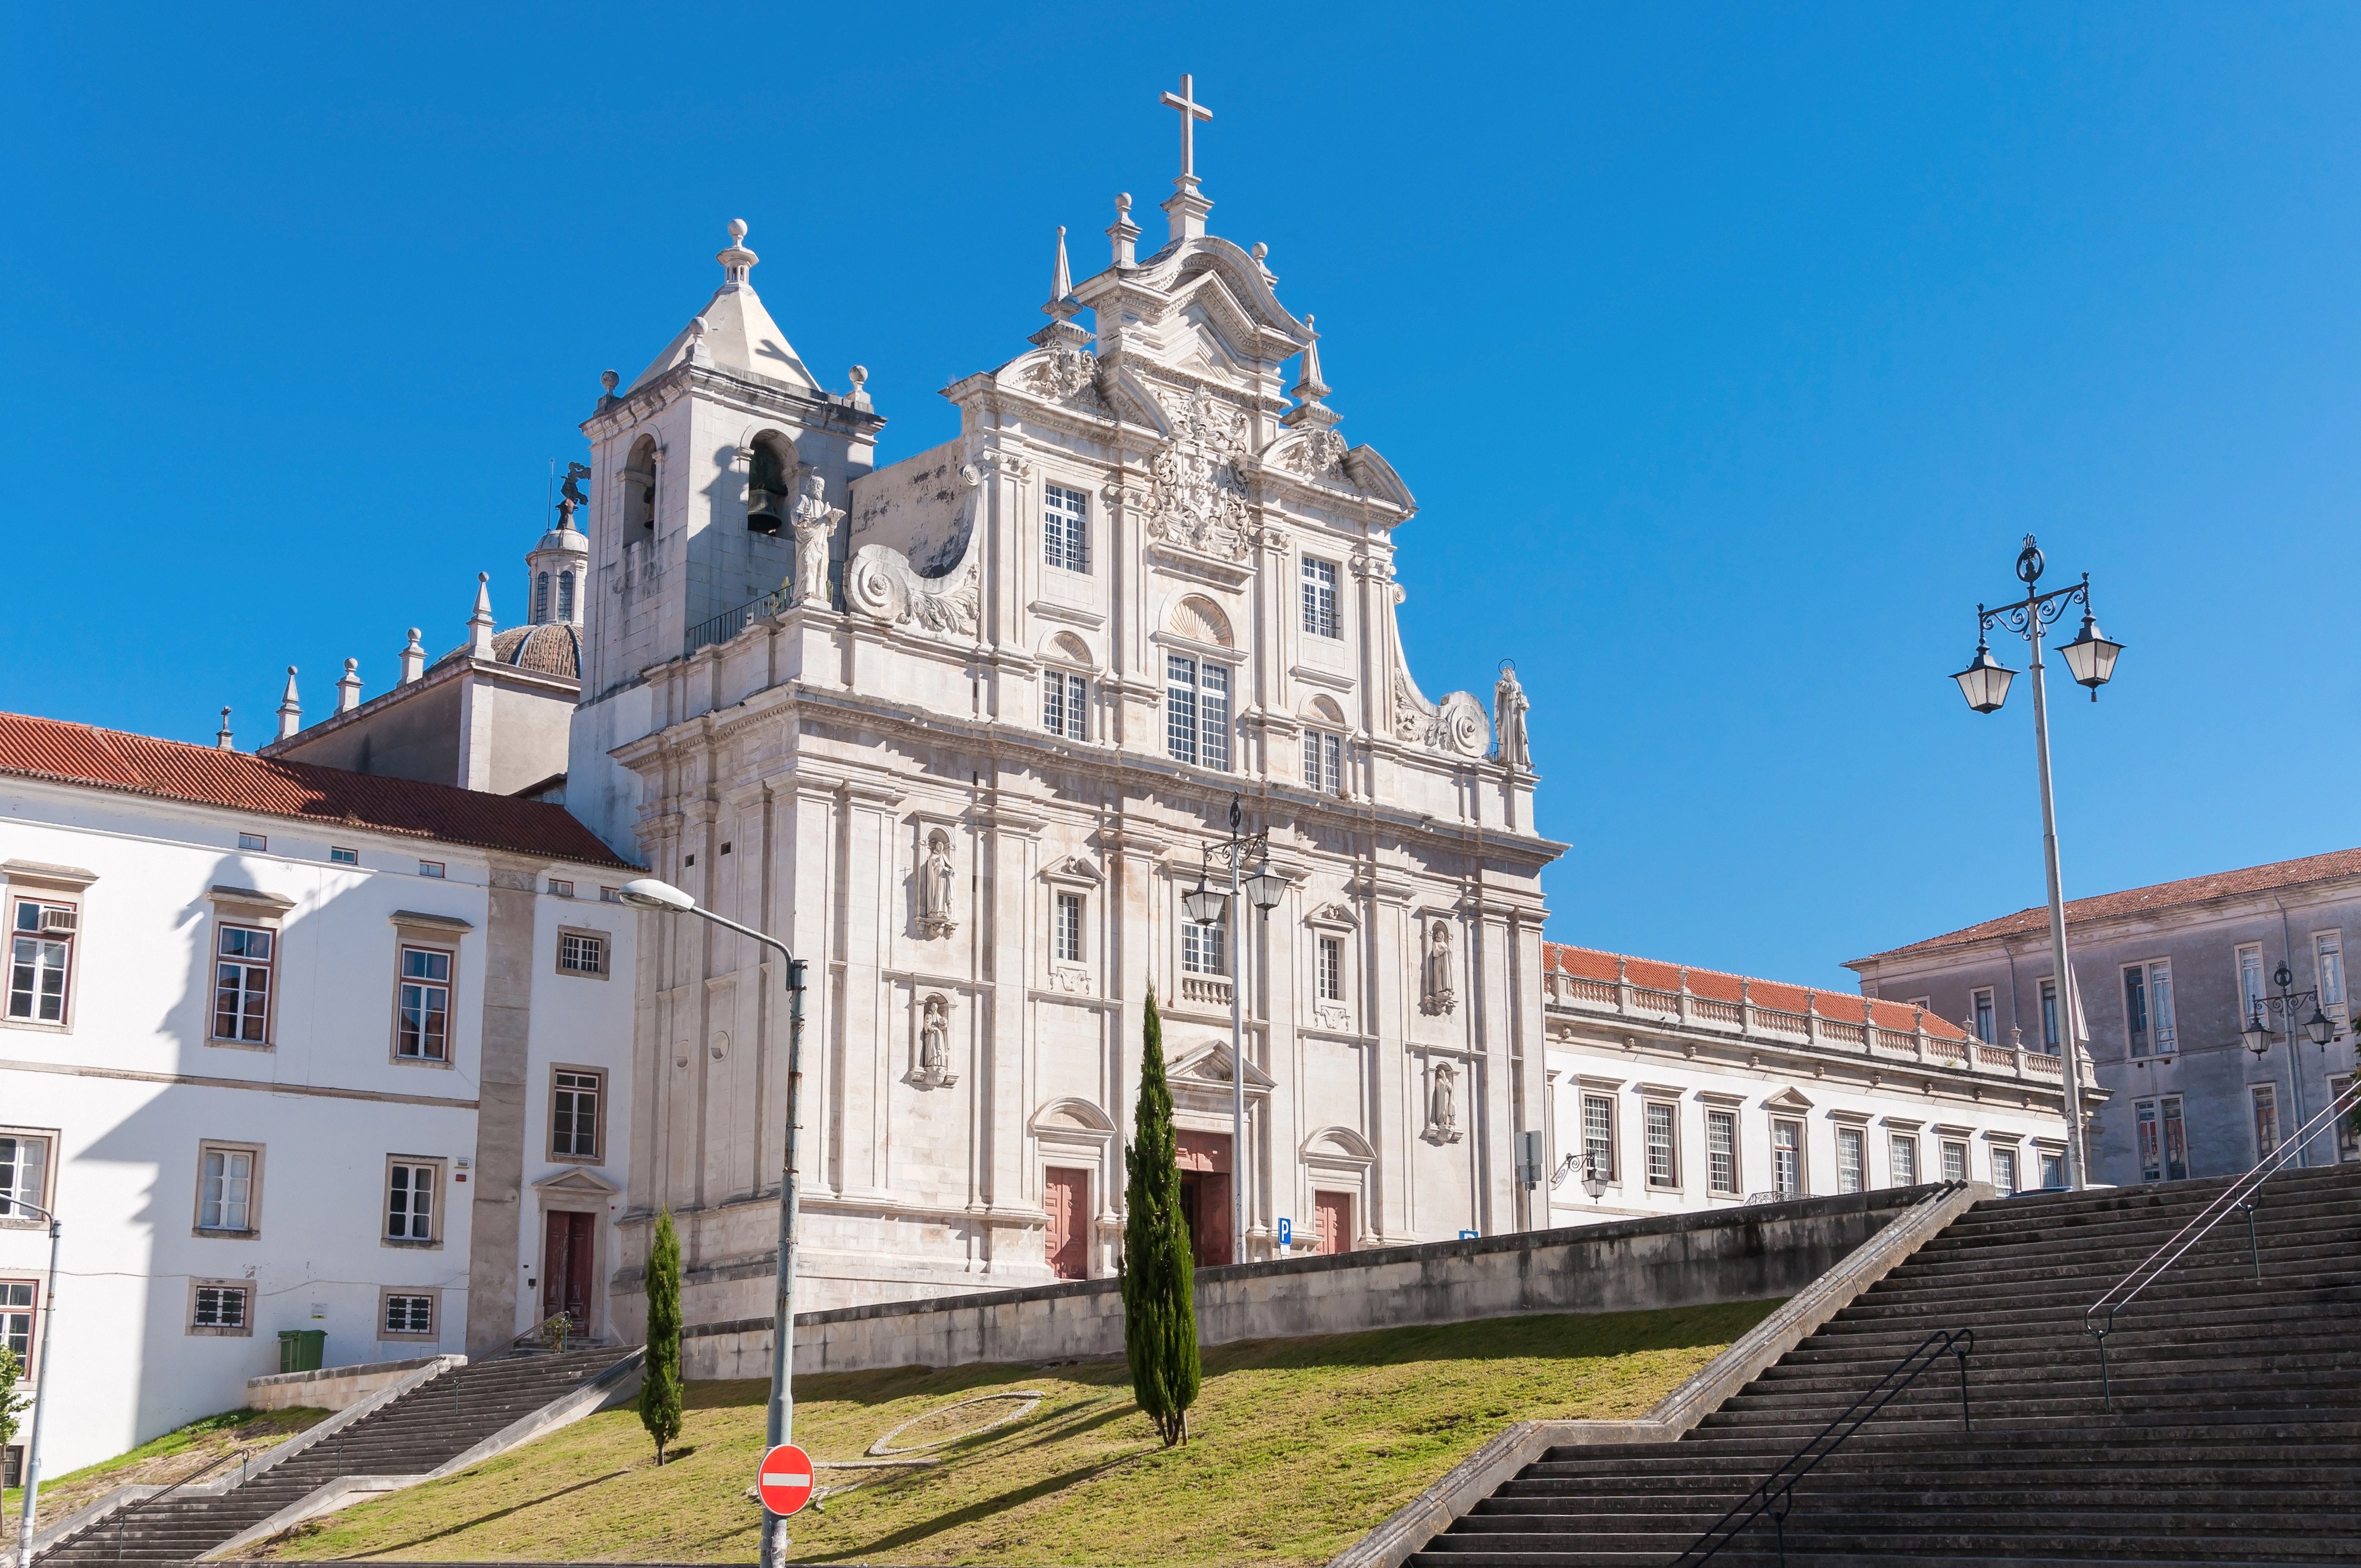 The New Cathedral of Coimbra (Se Nova de Coimbra) in Portugal. Photo: Shutterstock